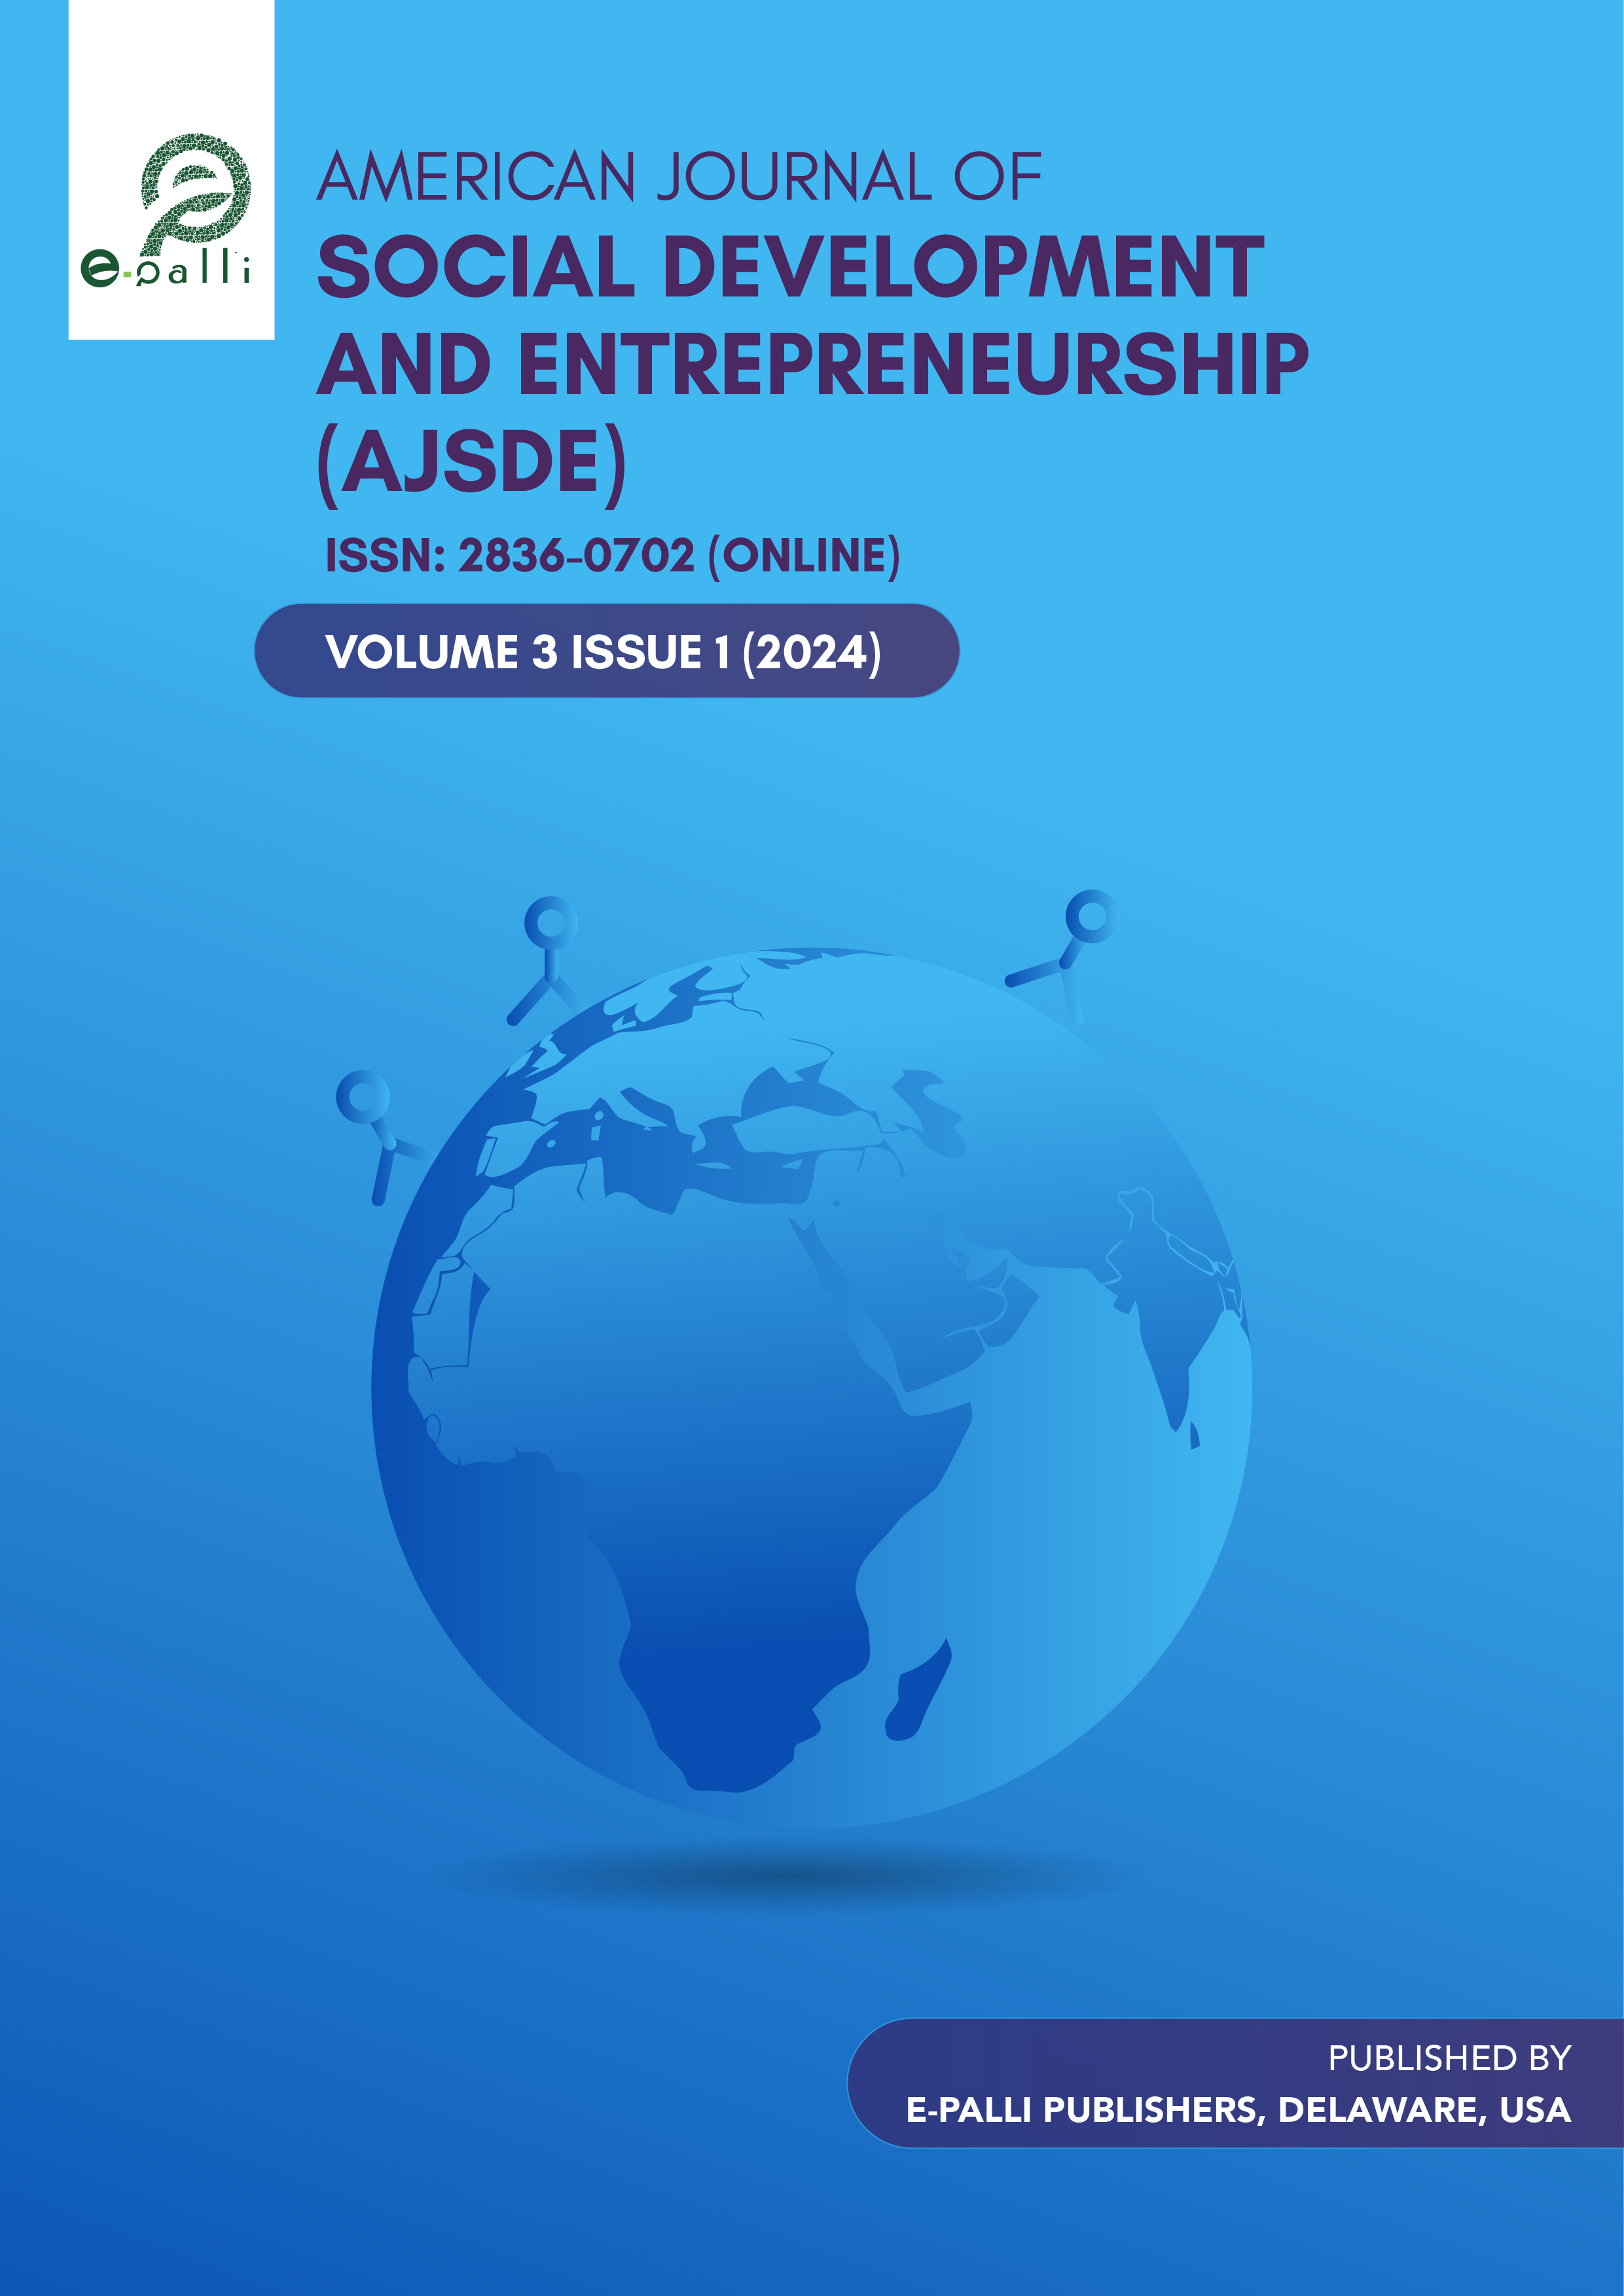 					View Vol. 3 No. 1 (2024): American Journal of Social Development and Entrepreneurship
				